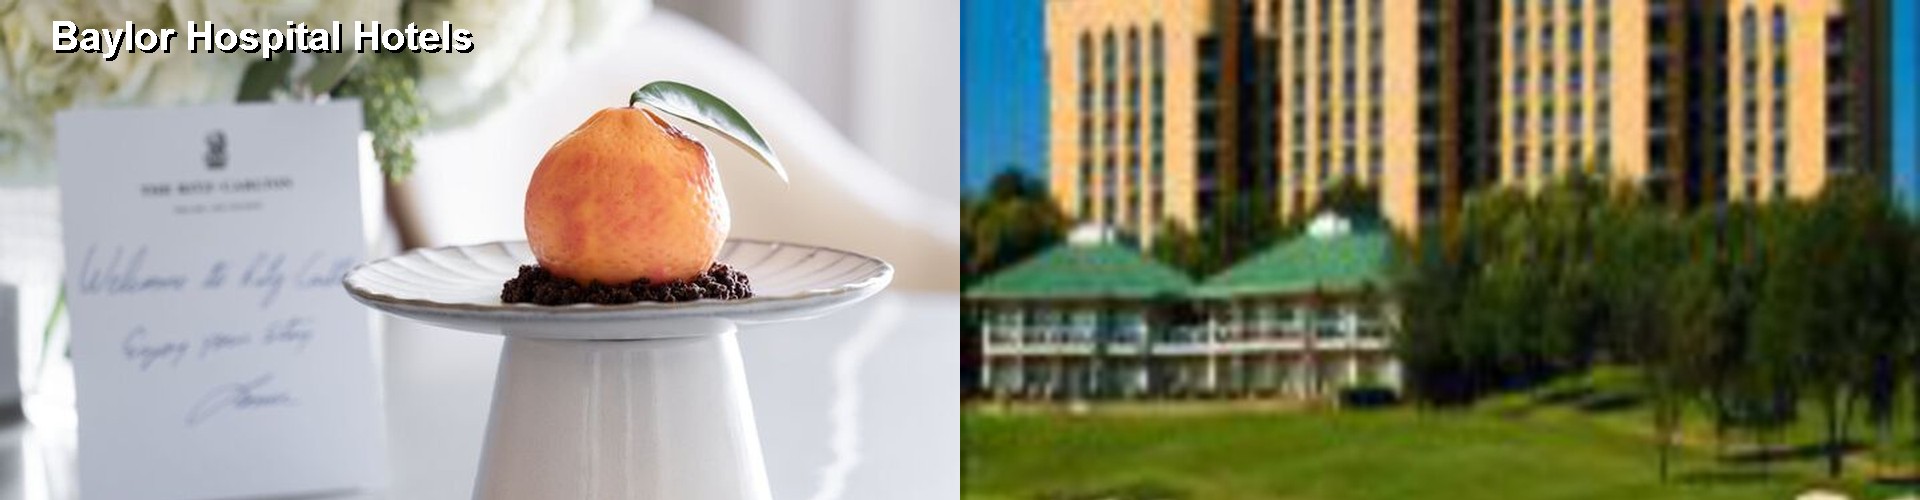 4 Best Hotels near Baylor Hospital